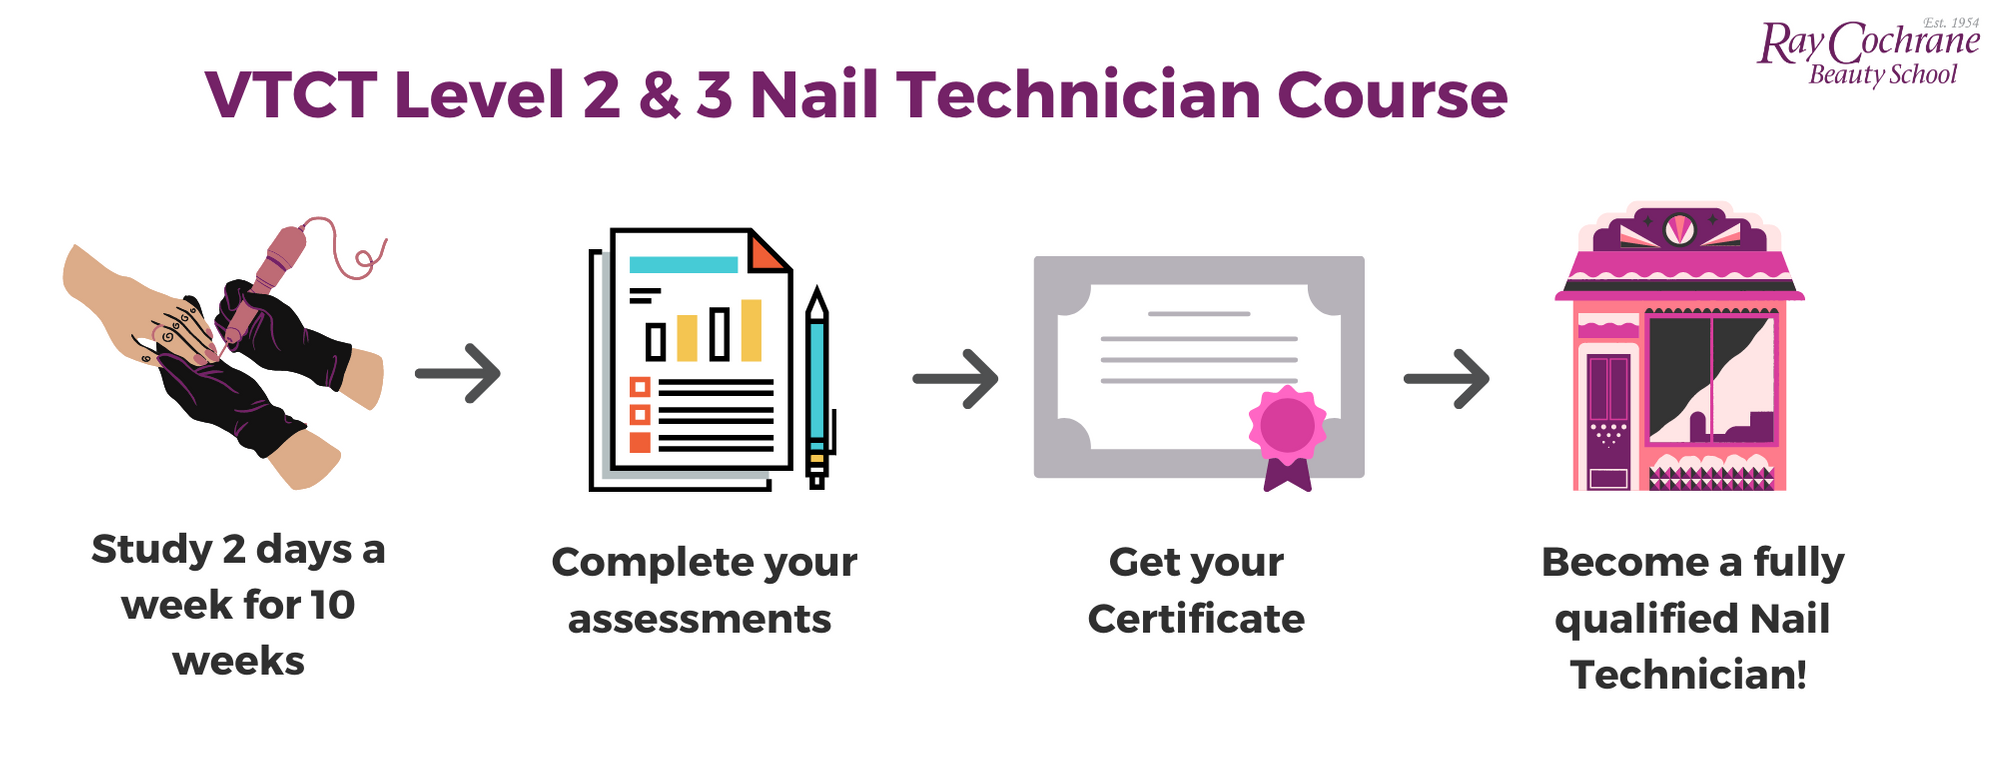 level 2& 3 nail technician qualification process